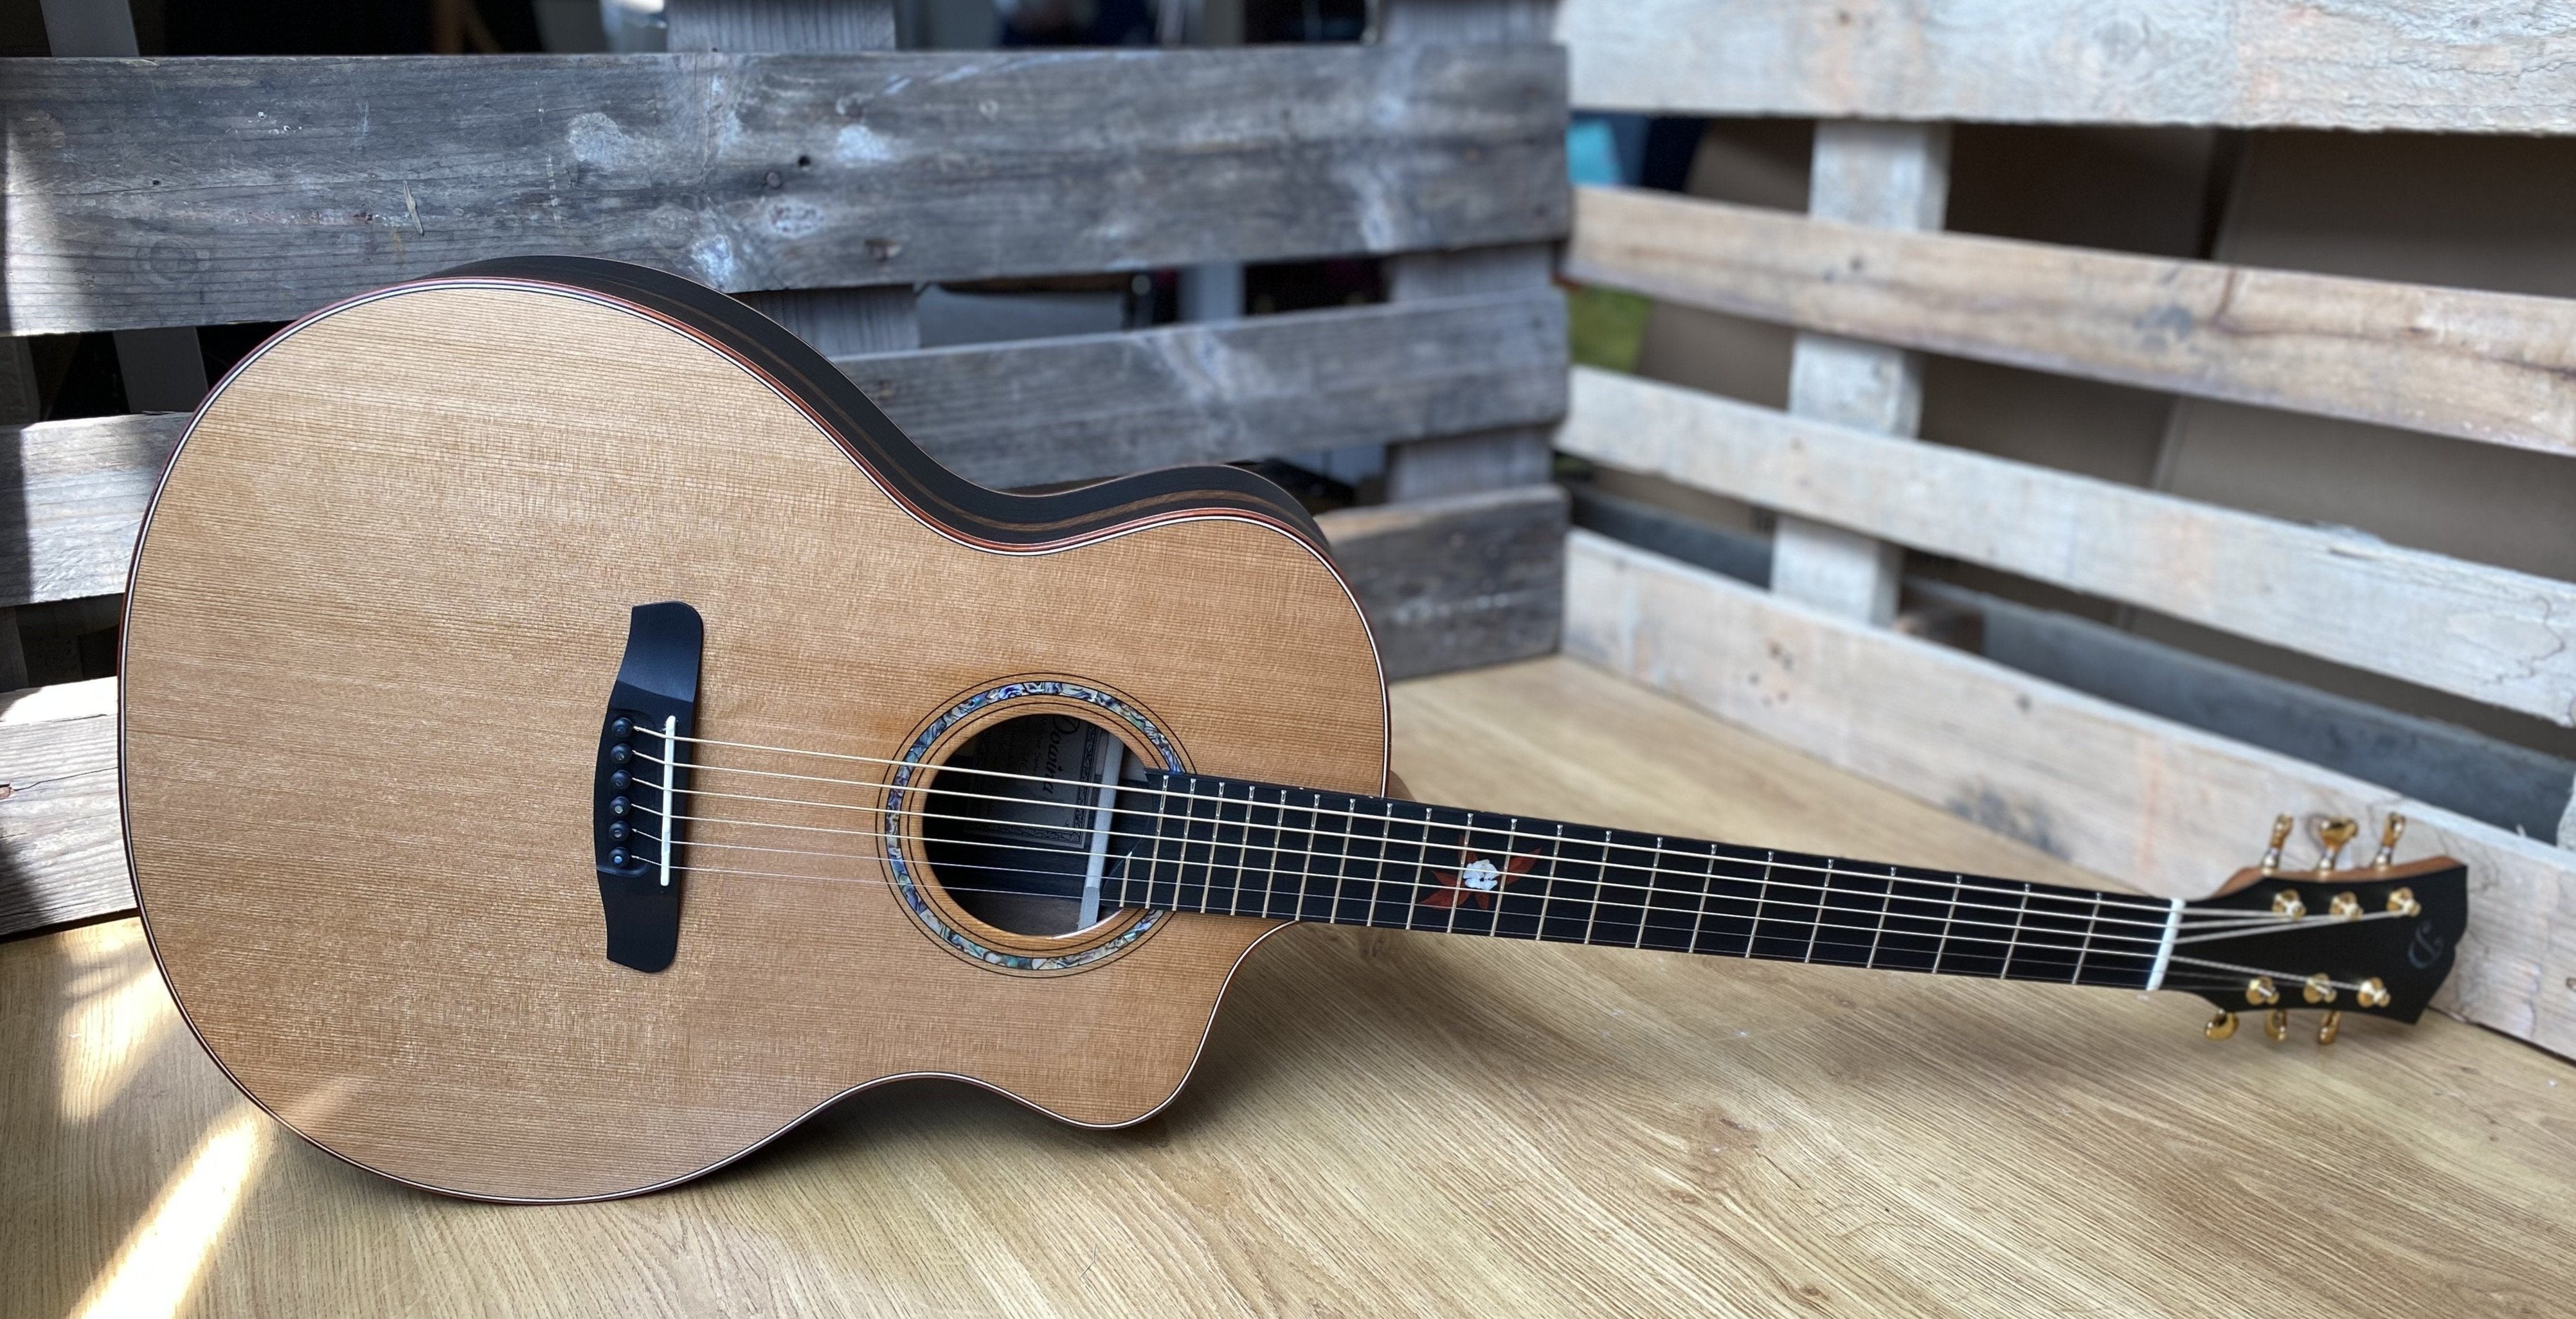 Dowina Figured Ebony GAC Master Build, Acoustic Guitar for sale at Richards Guitars.